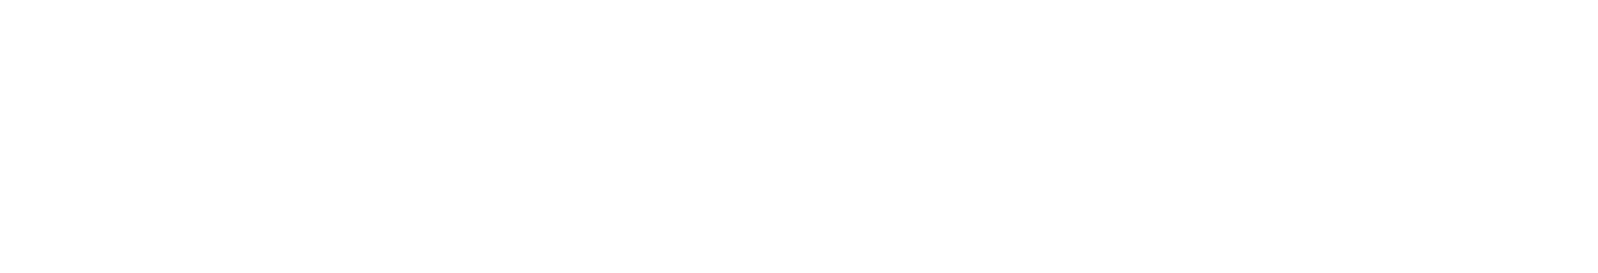 Tejon Ranch
 logo large for dark backgrounds (transparent PNG)